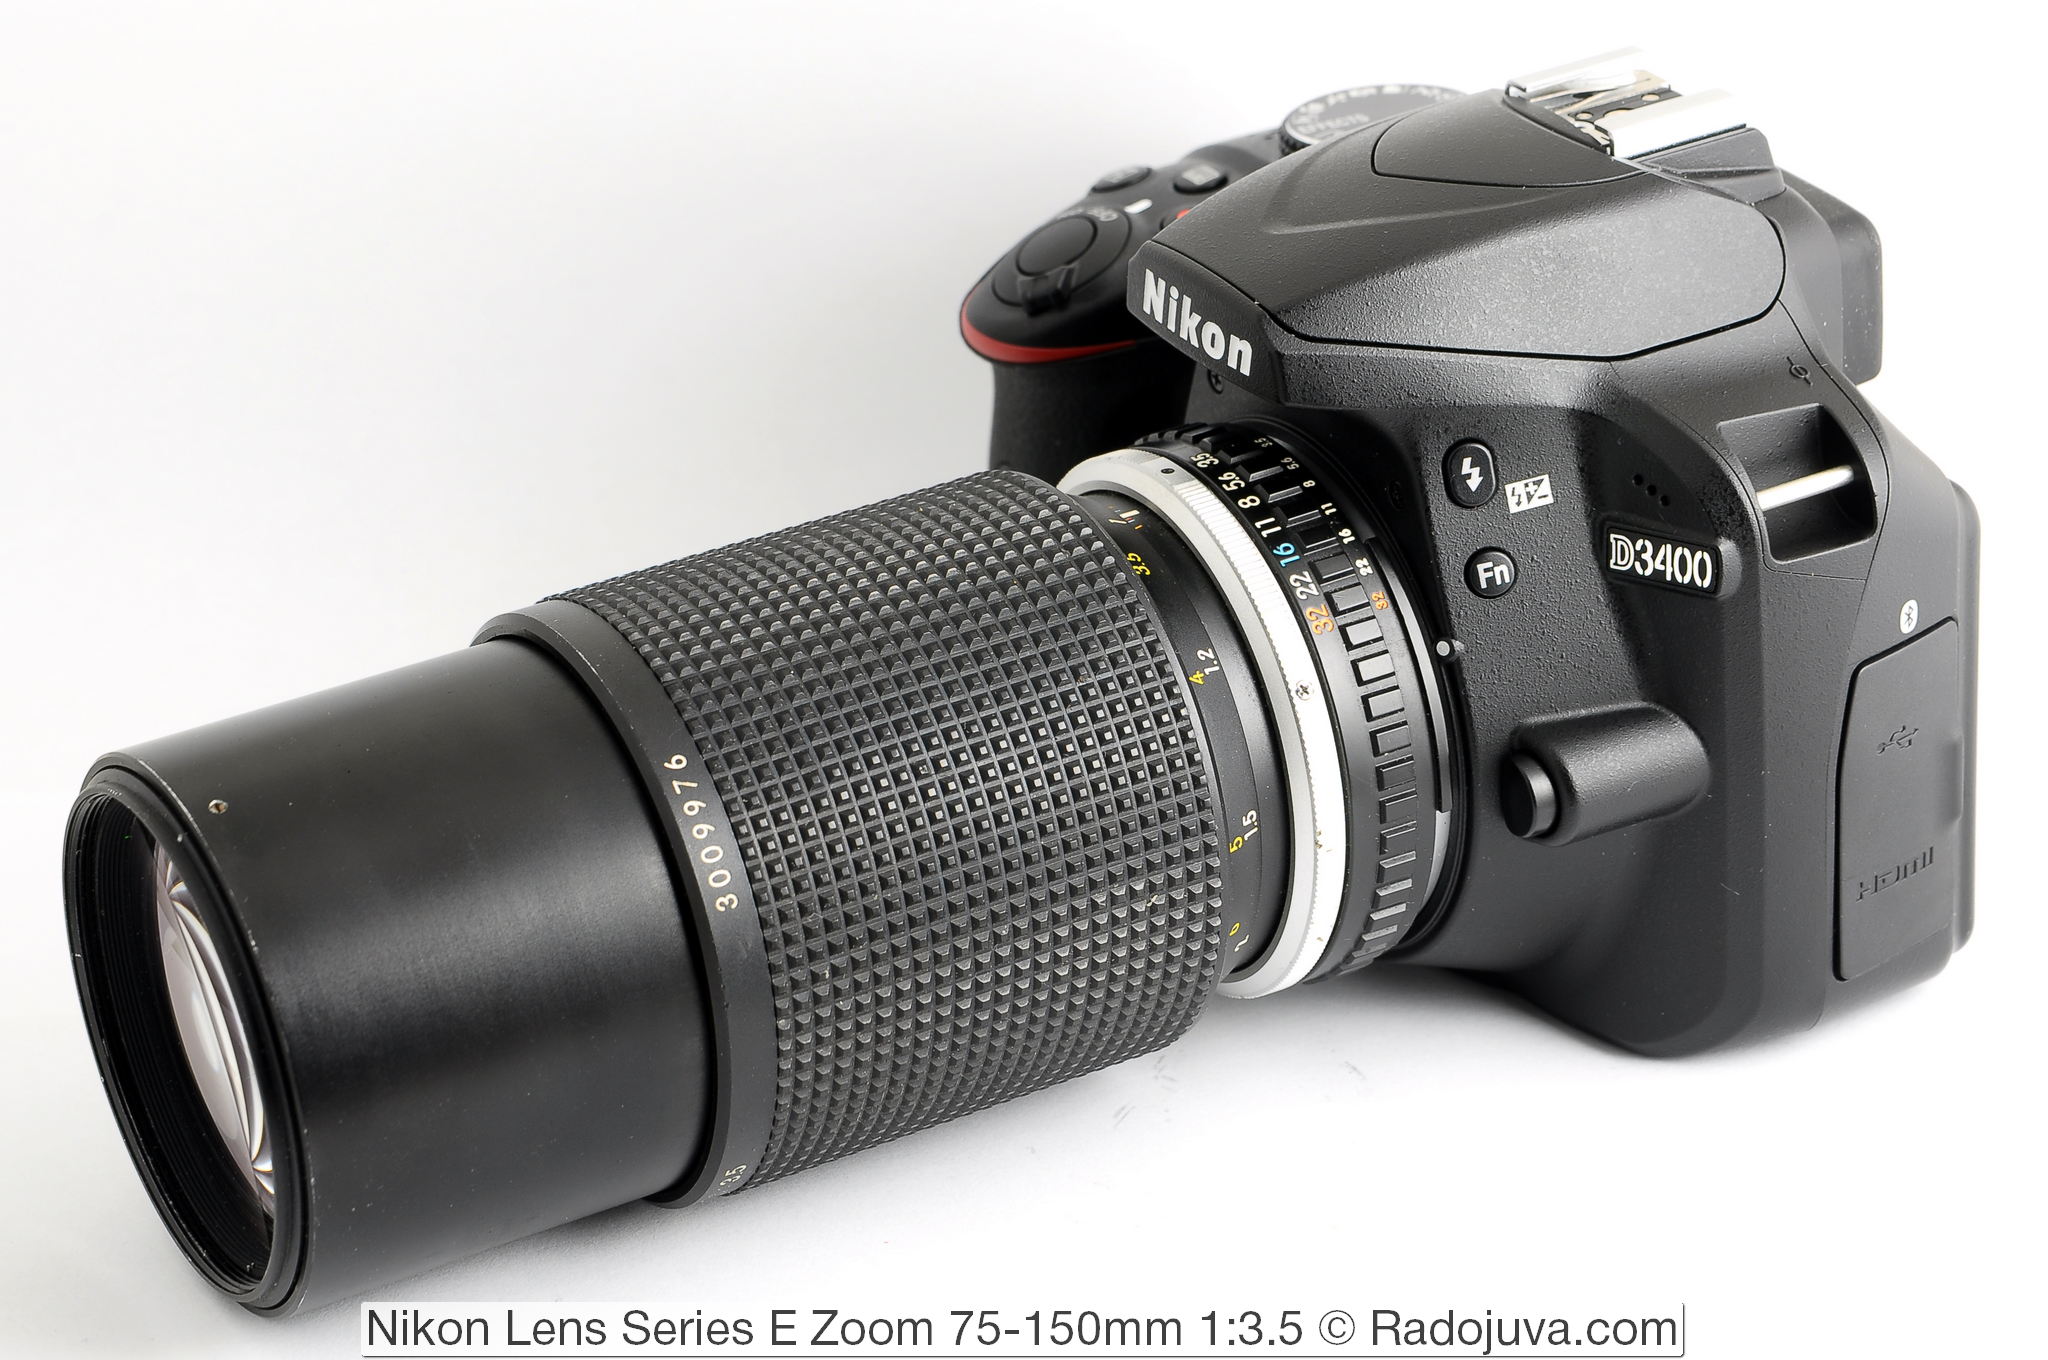 Nikon Lens Series E Zoom 75-150mm 1: 3.5 (MKII)